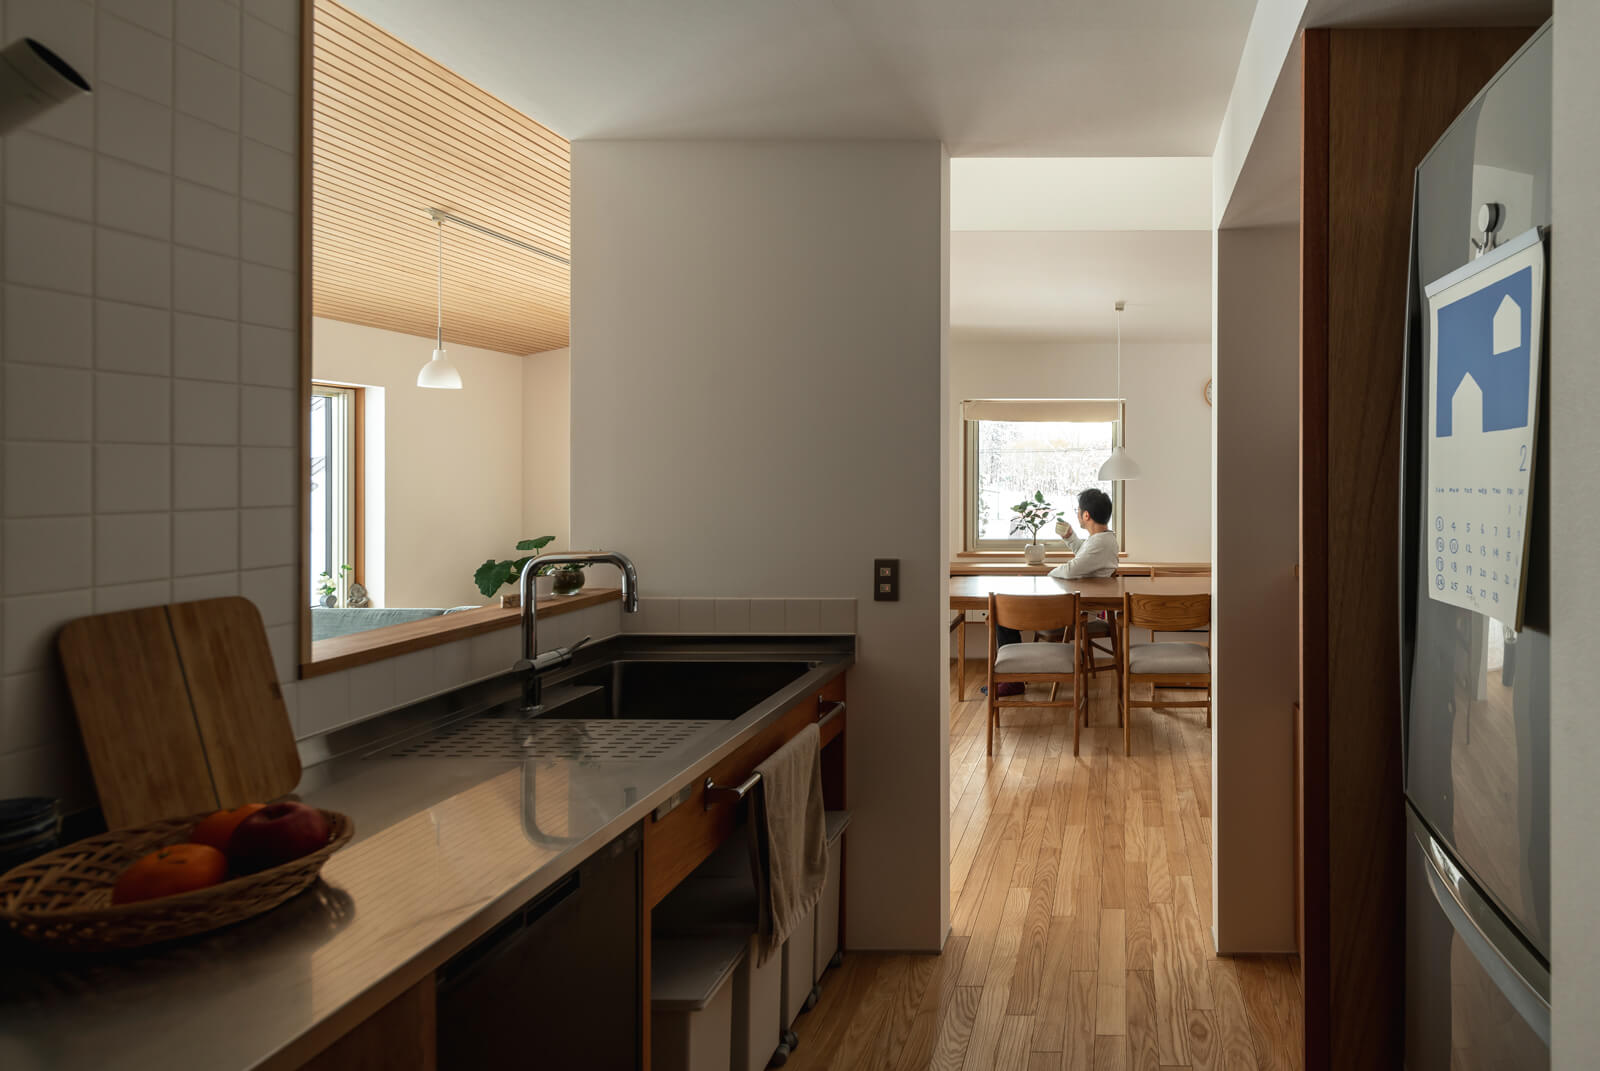 LDと壁だけで分離しているキッチンは、回遊動線の中心にレイアウトすることで、抜群の家事効率とほどよい閉鎖性を実現